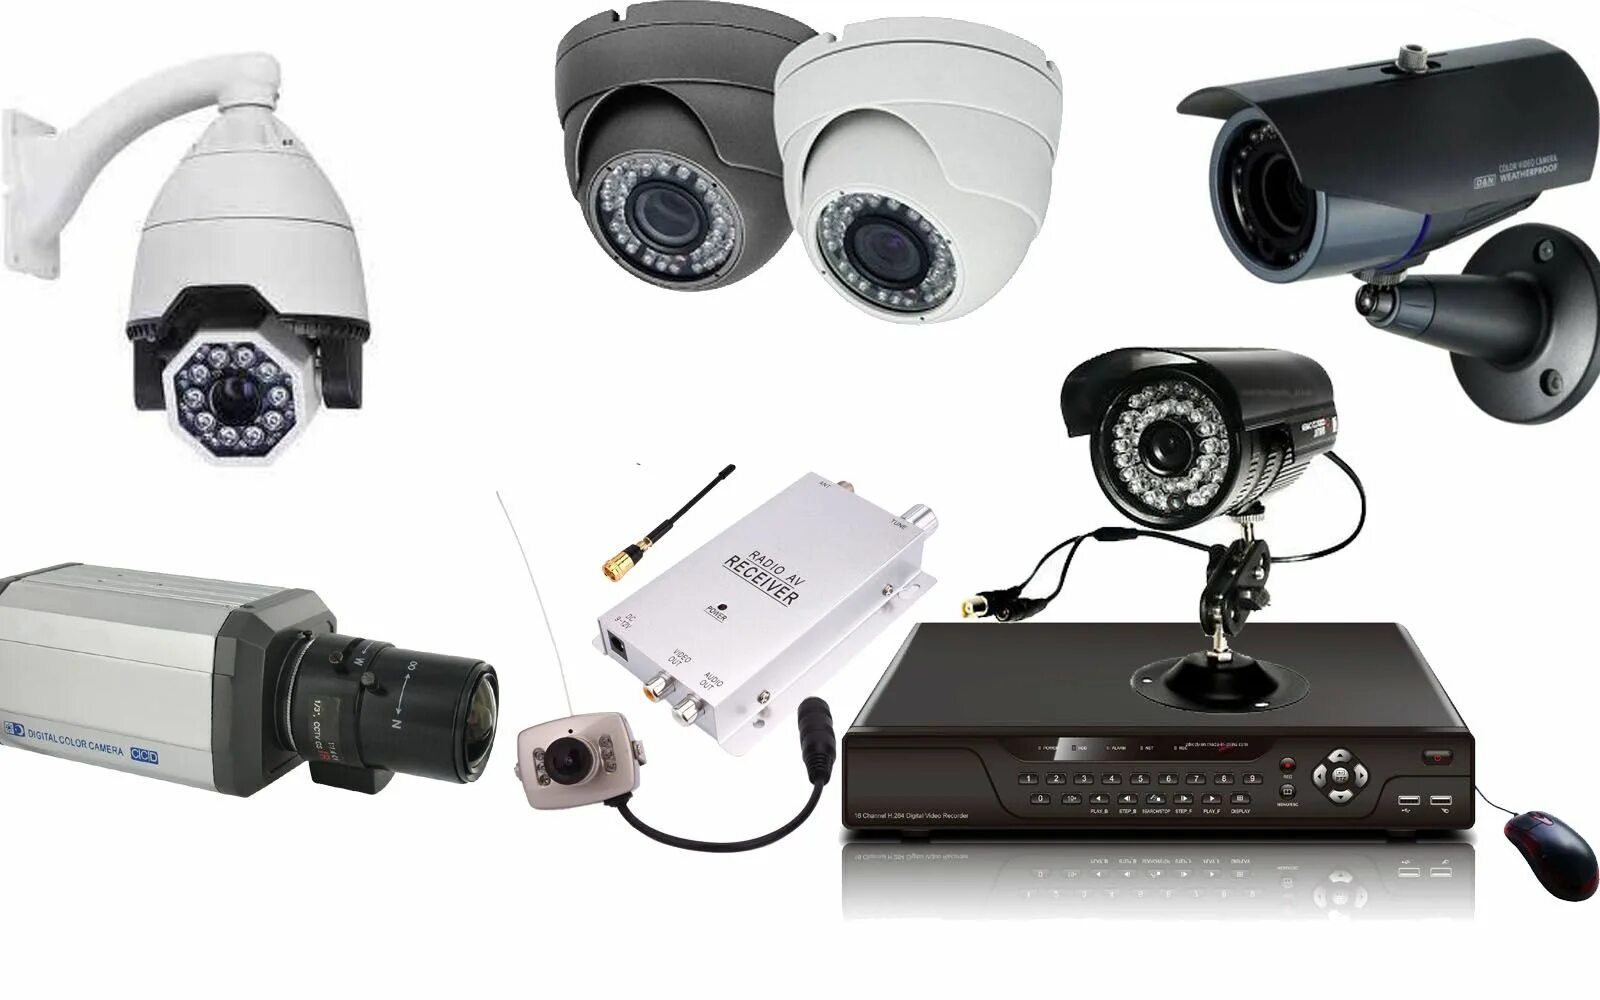 IP CCTV камера. Камера видеонаблюдения nc213vir. Камера CCTV ACECOP ACV 100afzt. Камера видеонаблюдения KDM-6202n. Risui cam